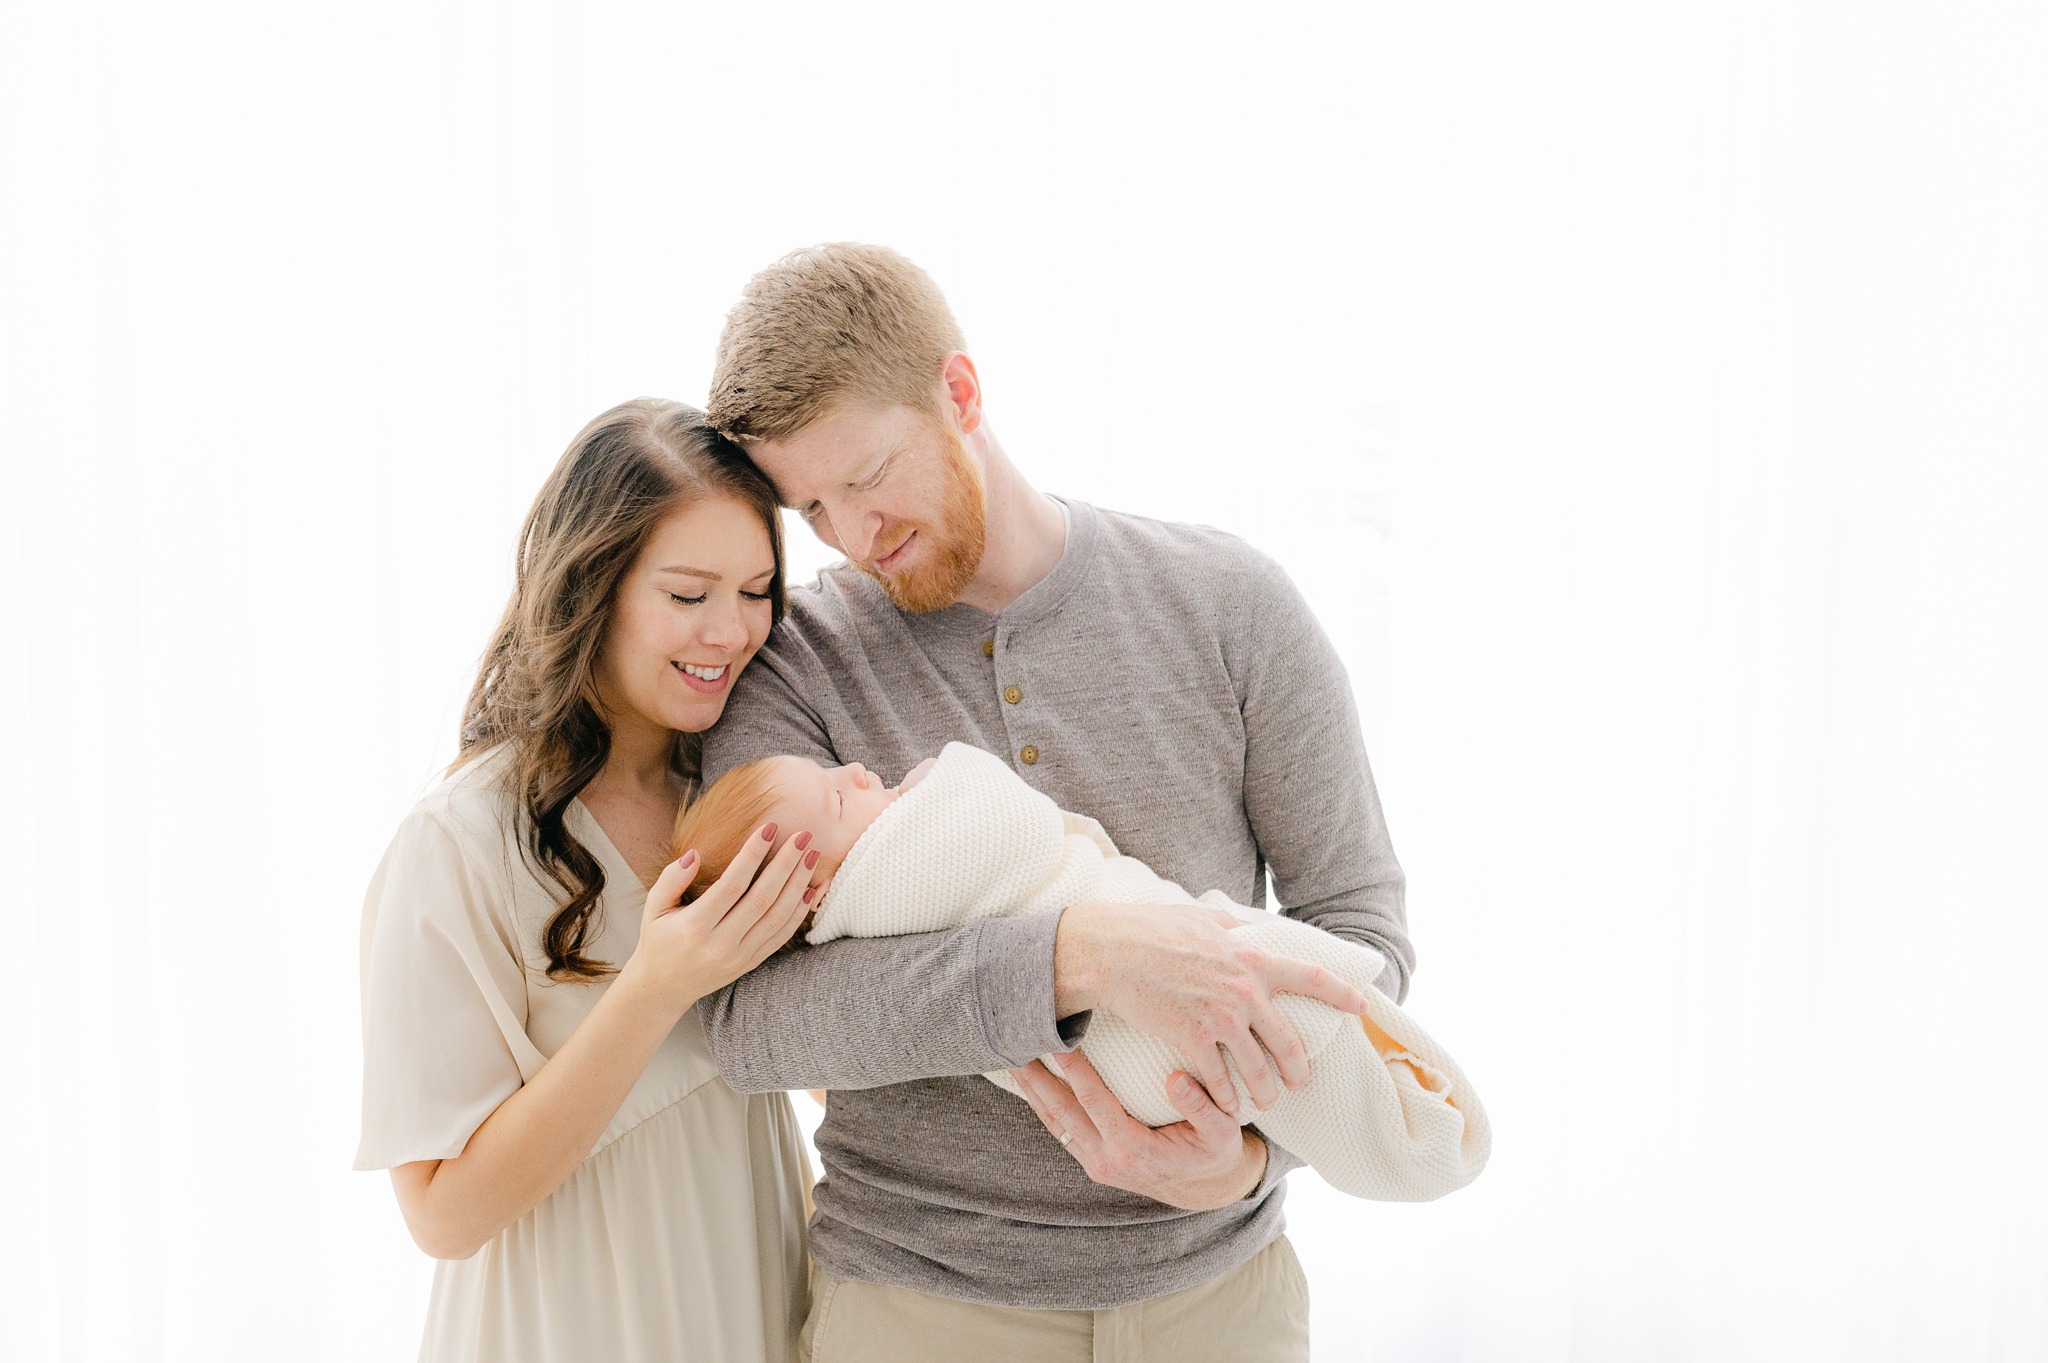 Dayton Photography Studio | Baby Ian & Family